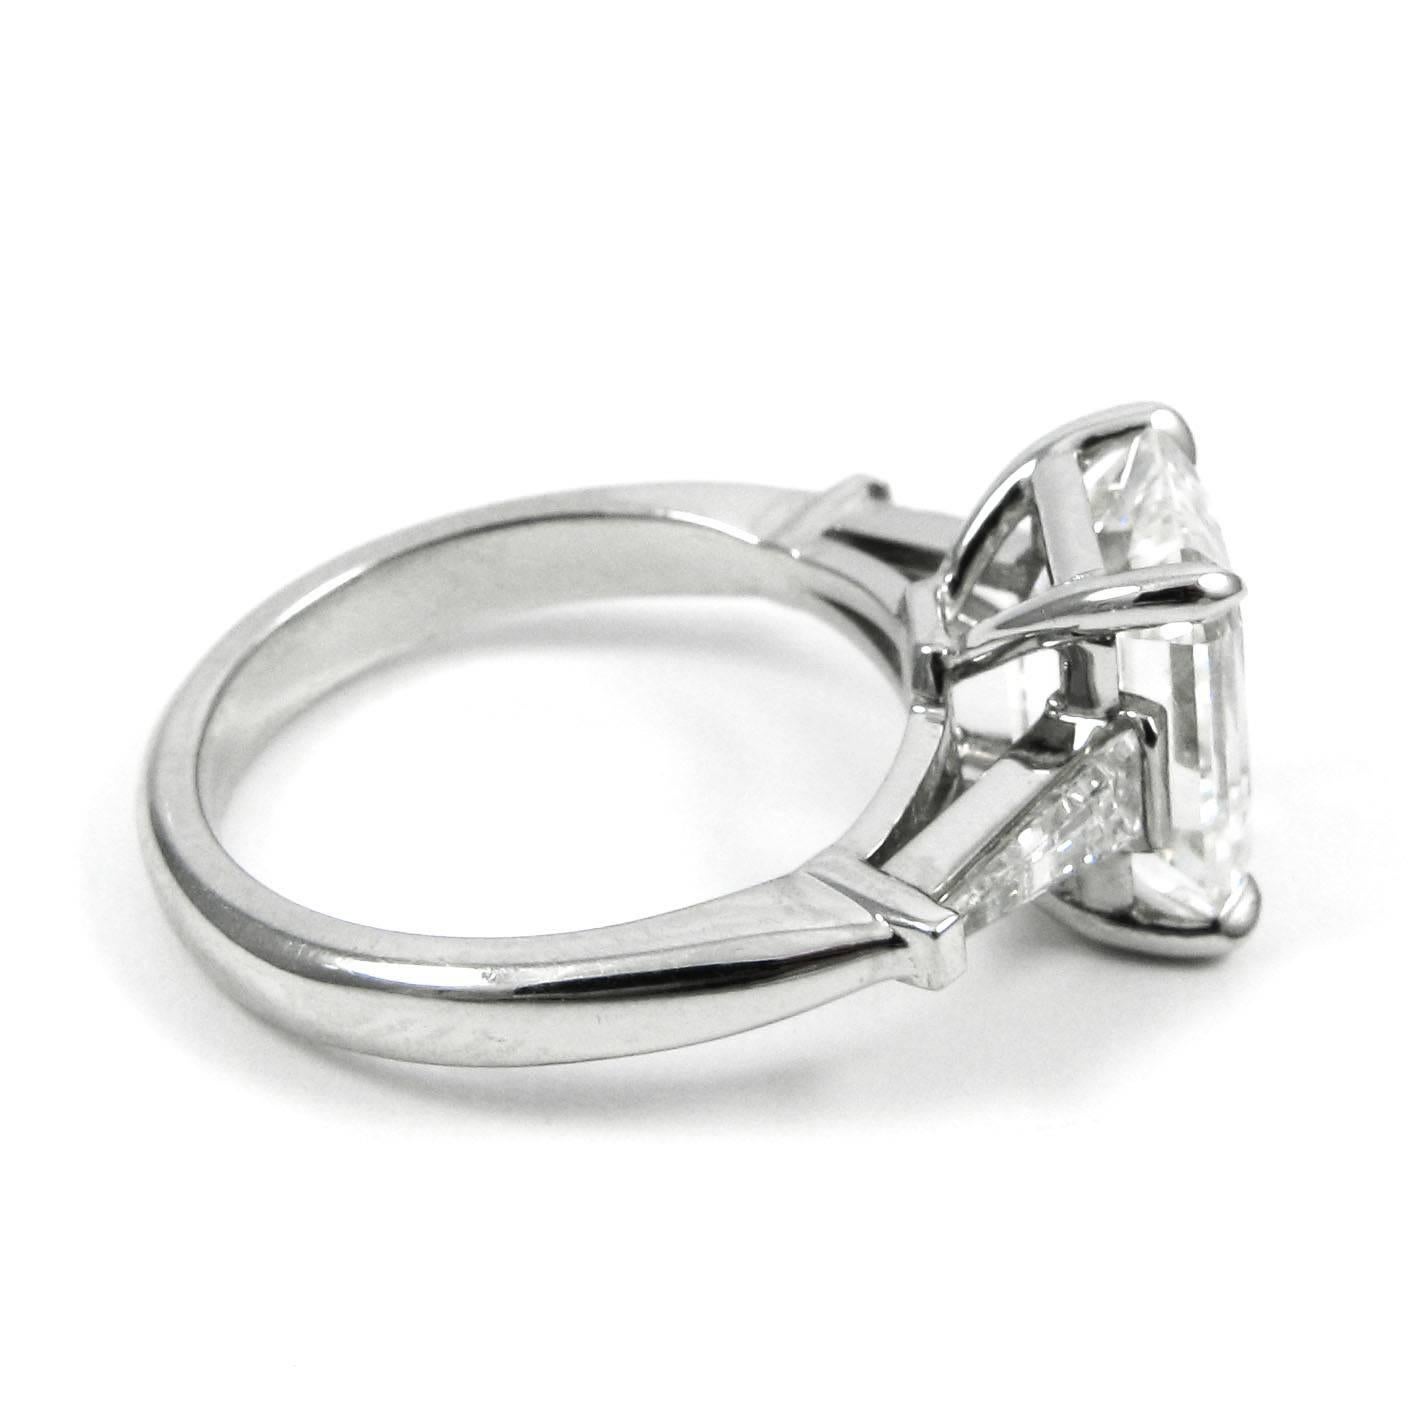 Women's or Men's GIA Certified 3.24 carat H VS1 Emerald Cut Classic Diamond Platinum Ring